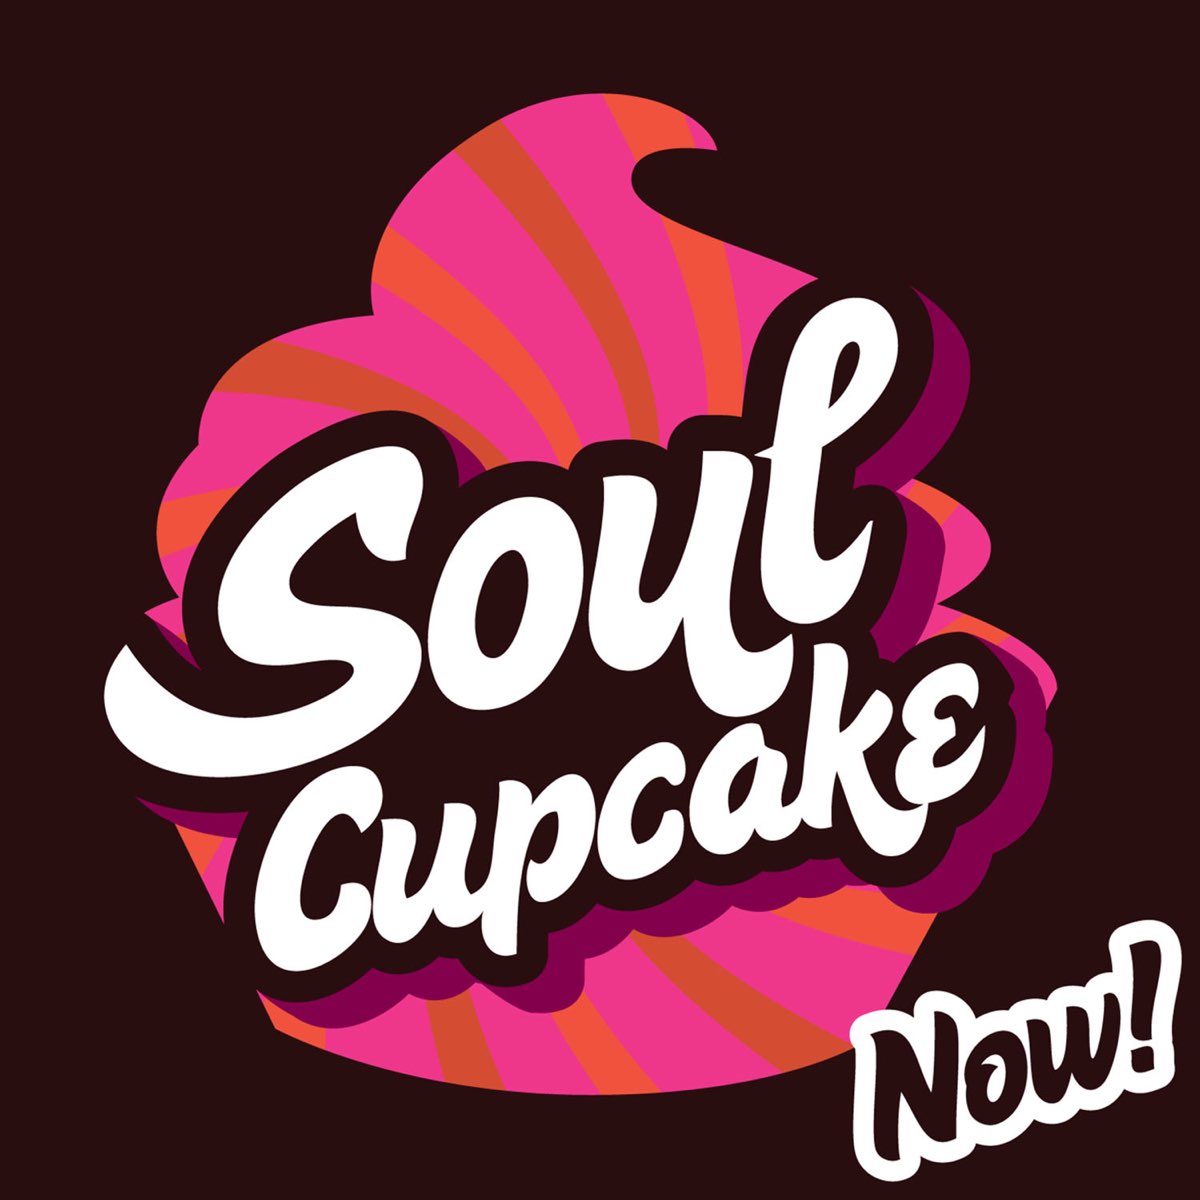 Now soul. Cupcake альбомы.